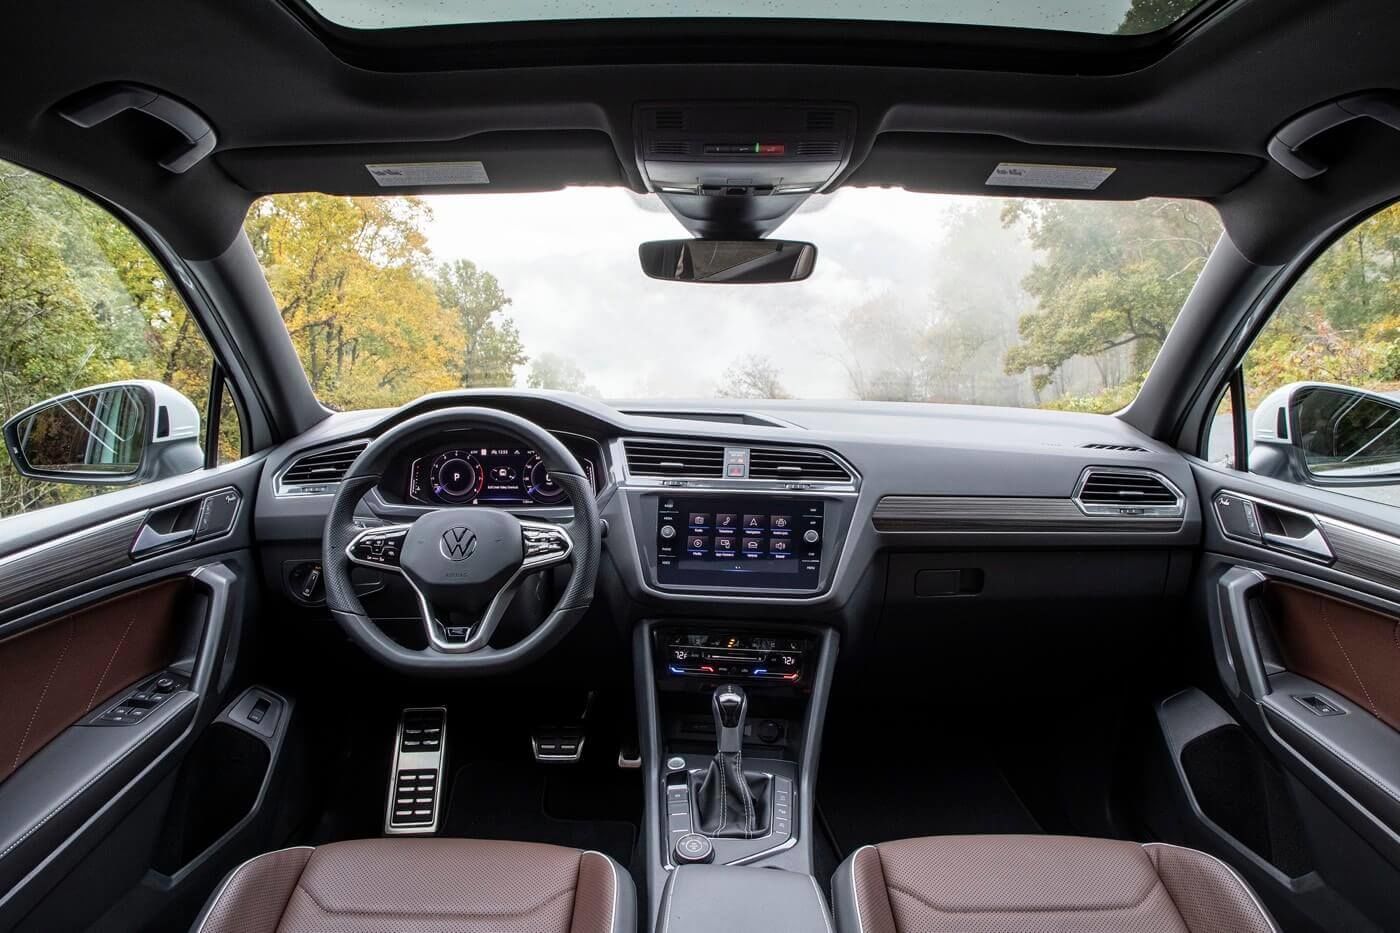 Cockpit avant d'un Volkswagen Tiguan 2022 incluant toutes ses technologies embarquées